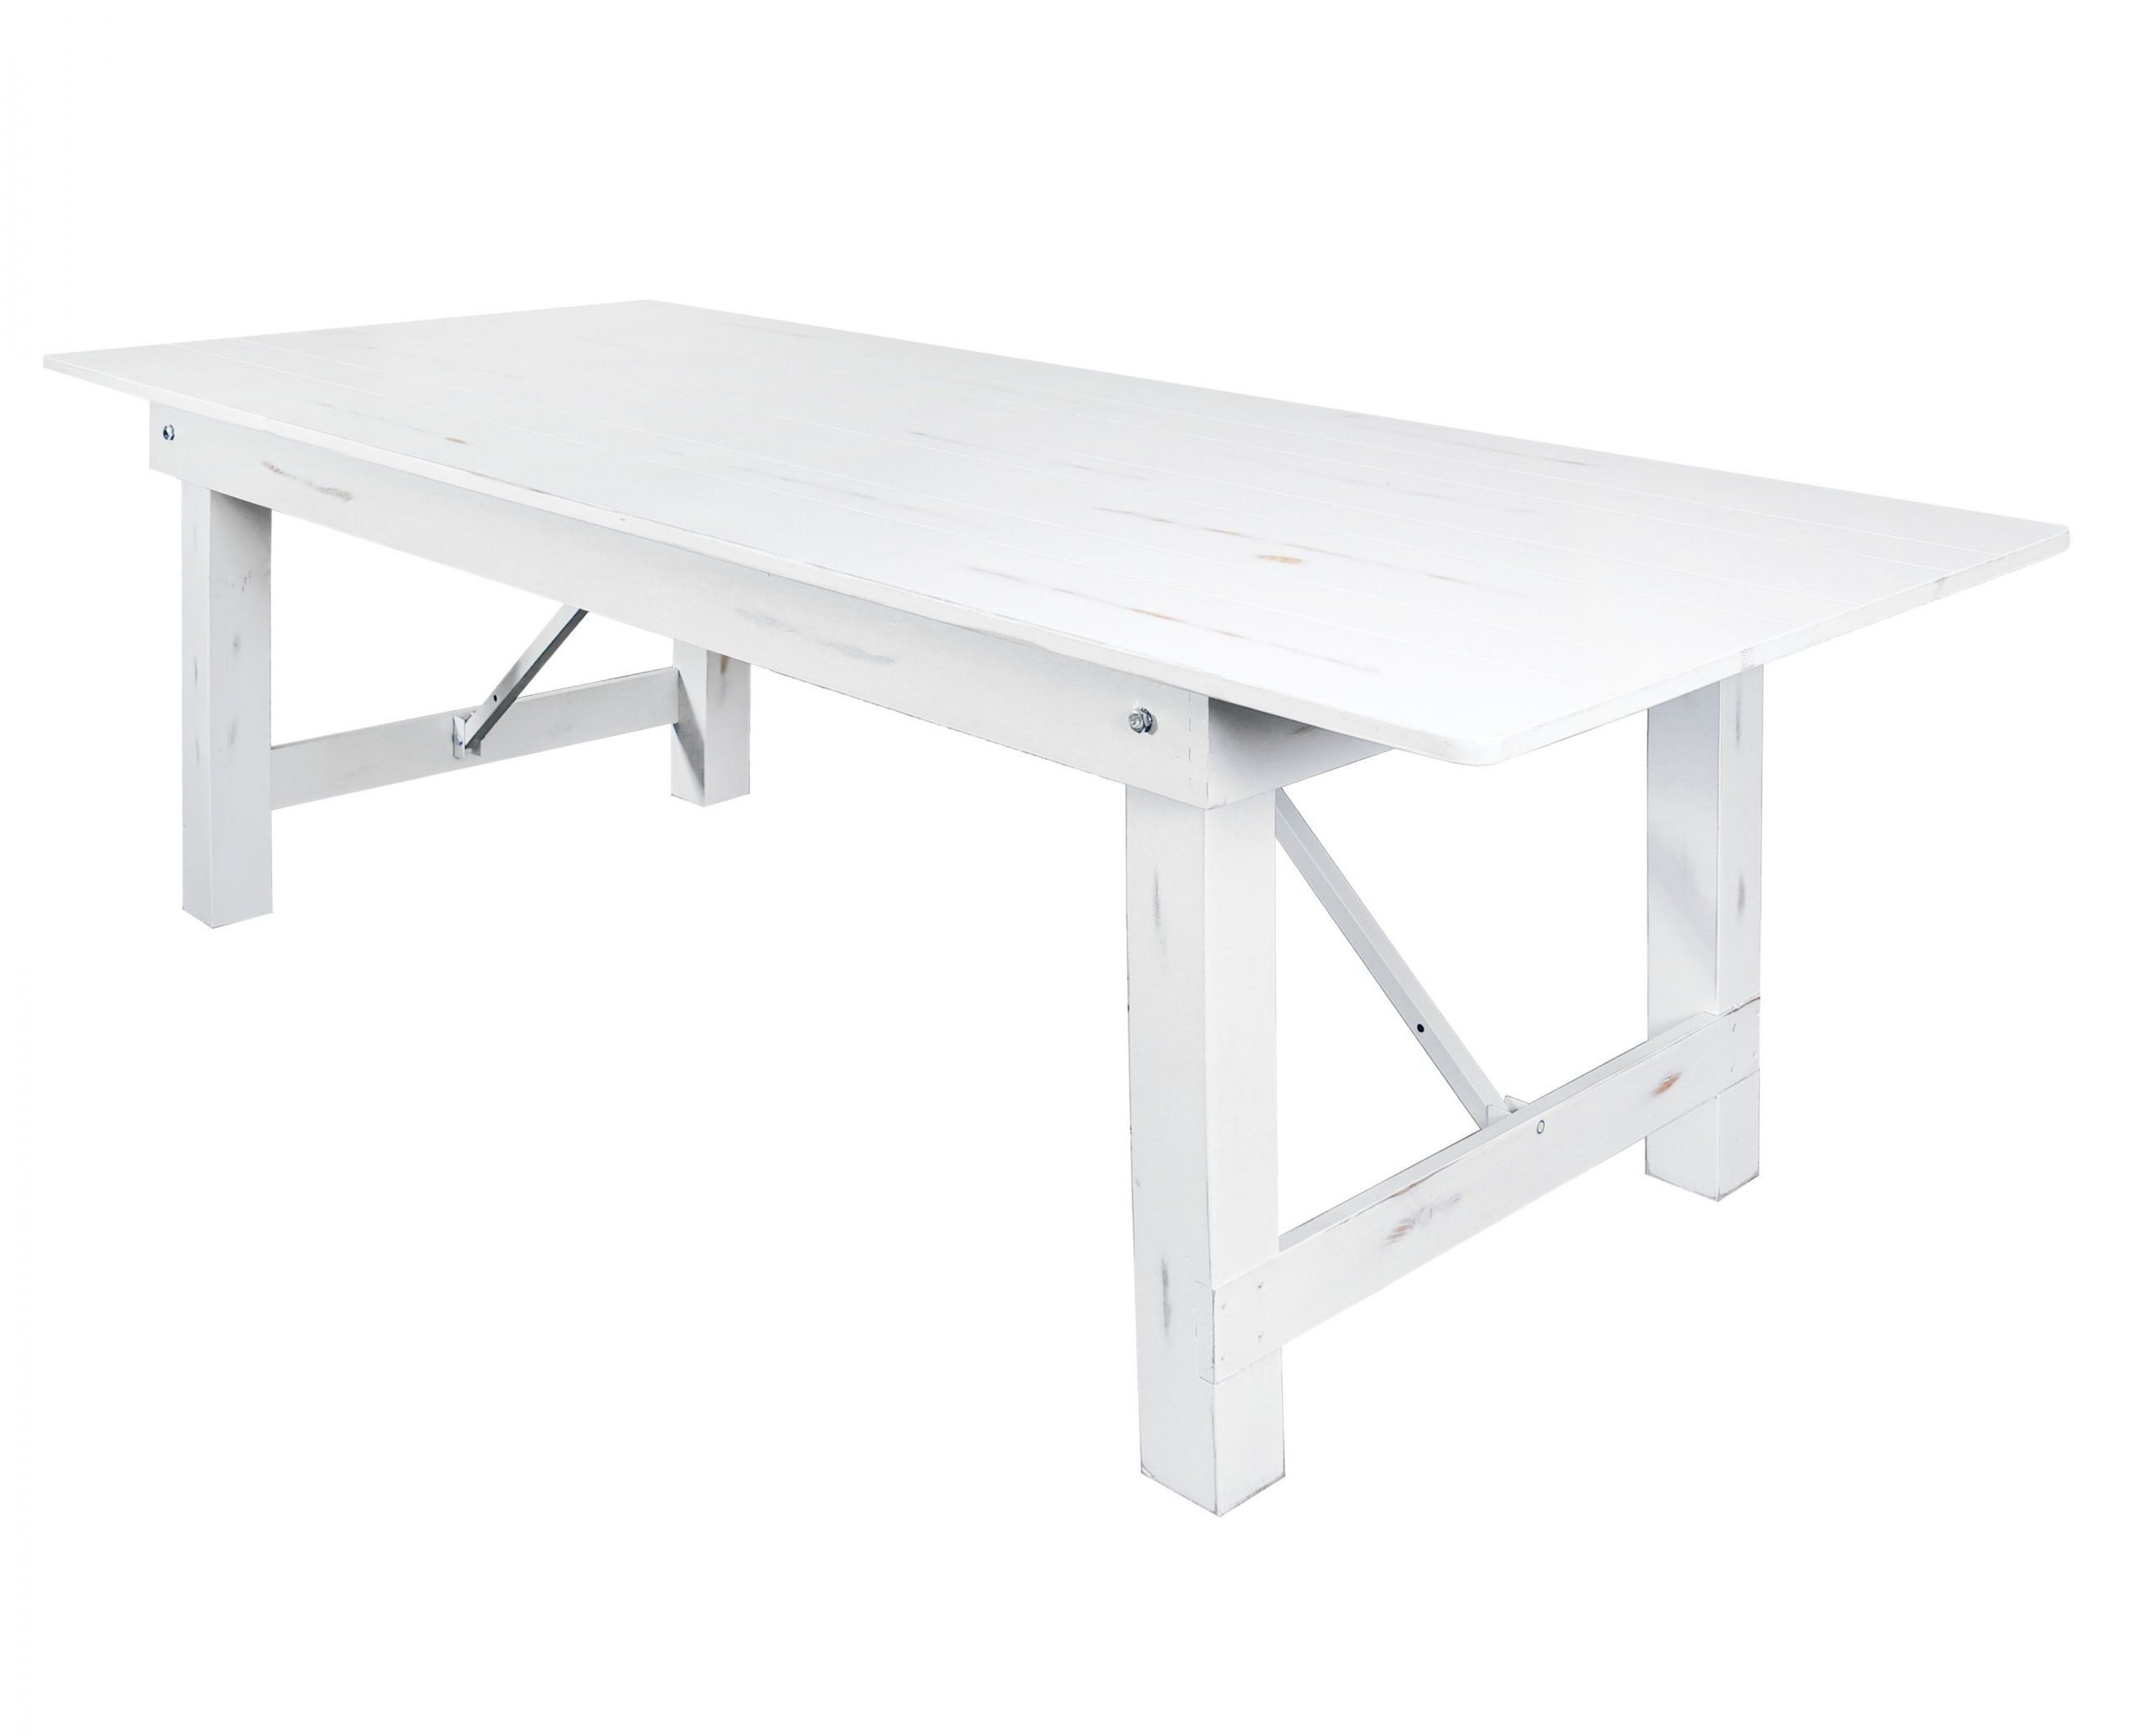 Table Farm Table Rectangle 96x40 Straight Leg Color White Distressed A Series TFARMRT9640 WHITEDIS S LEG AX T Right